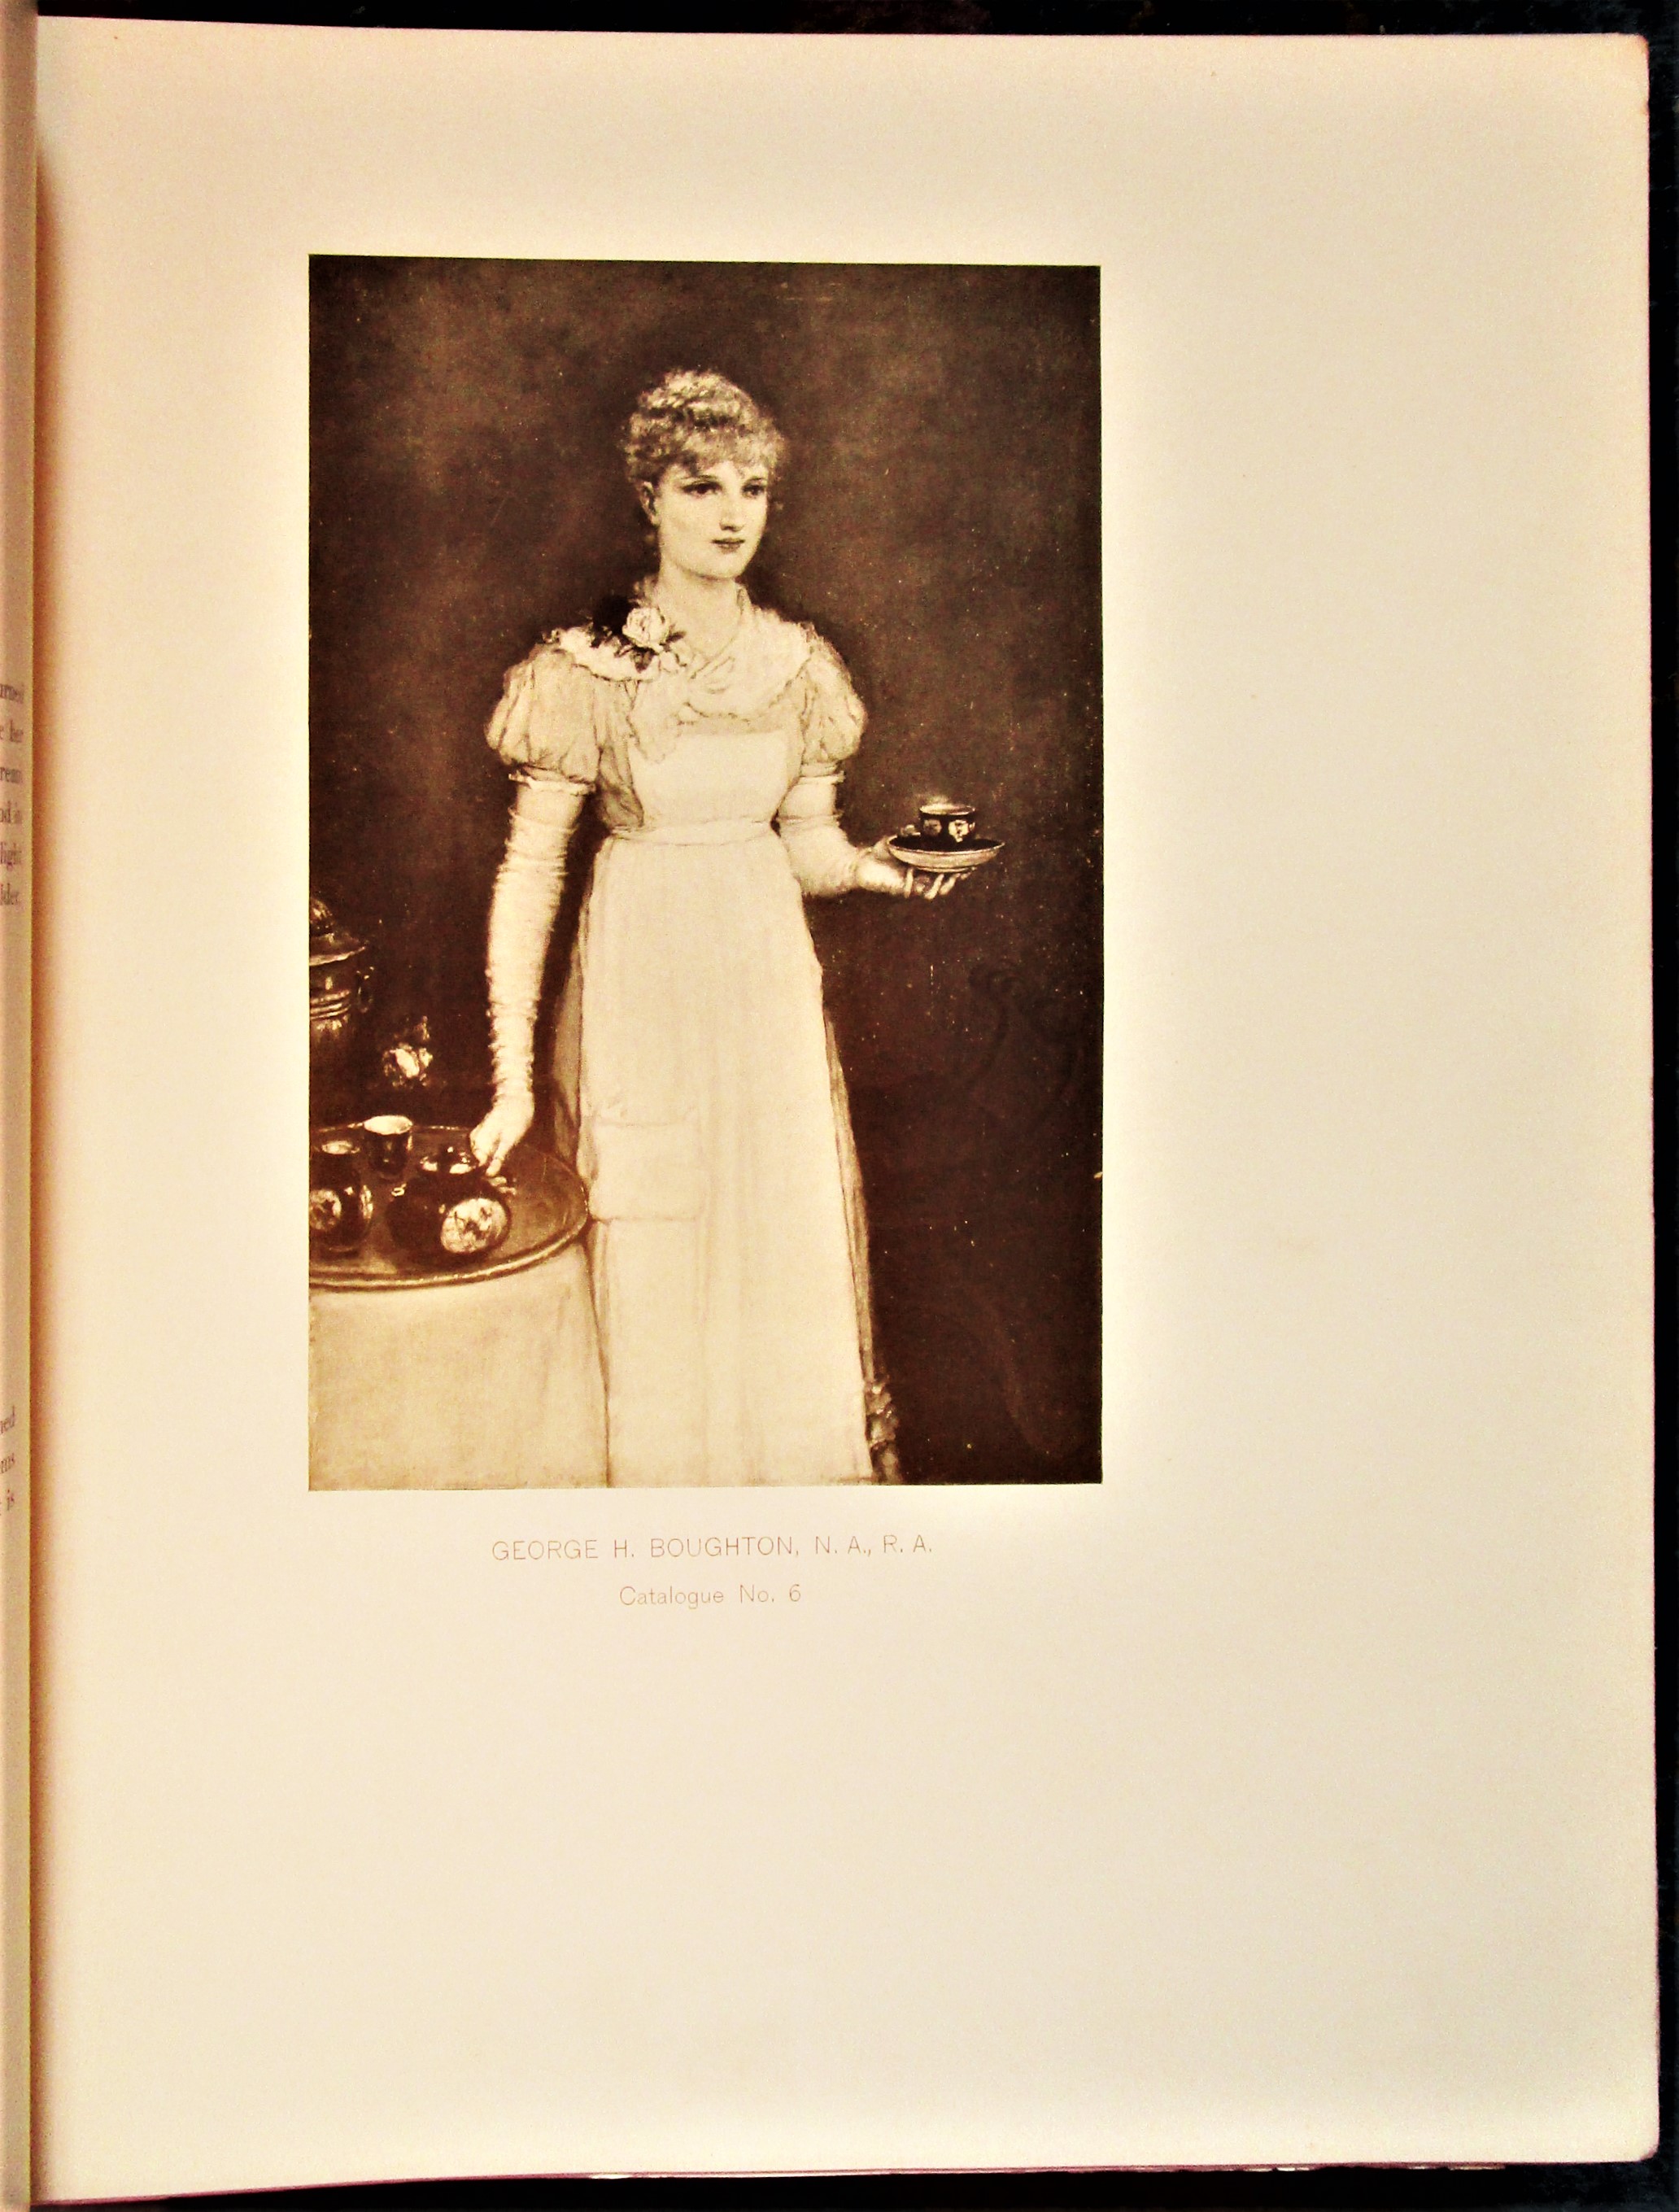 THE VERY VALUABLE ART PROPERTY OF ROBERT HOE - 1911 [Ltd Ed]